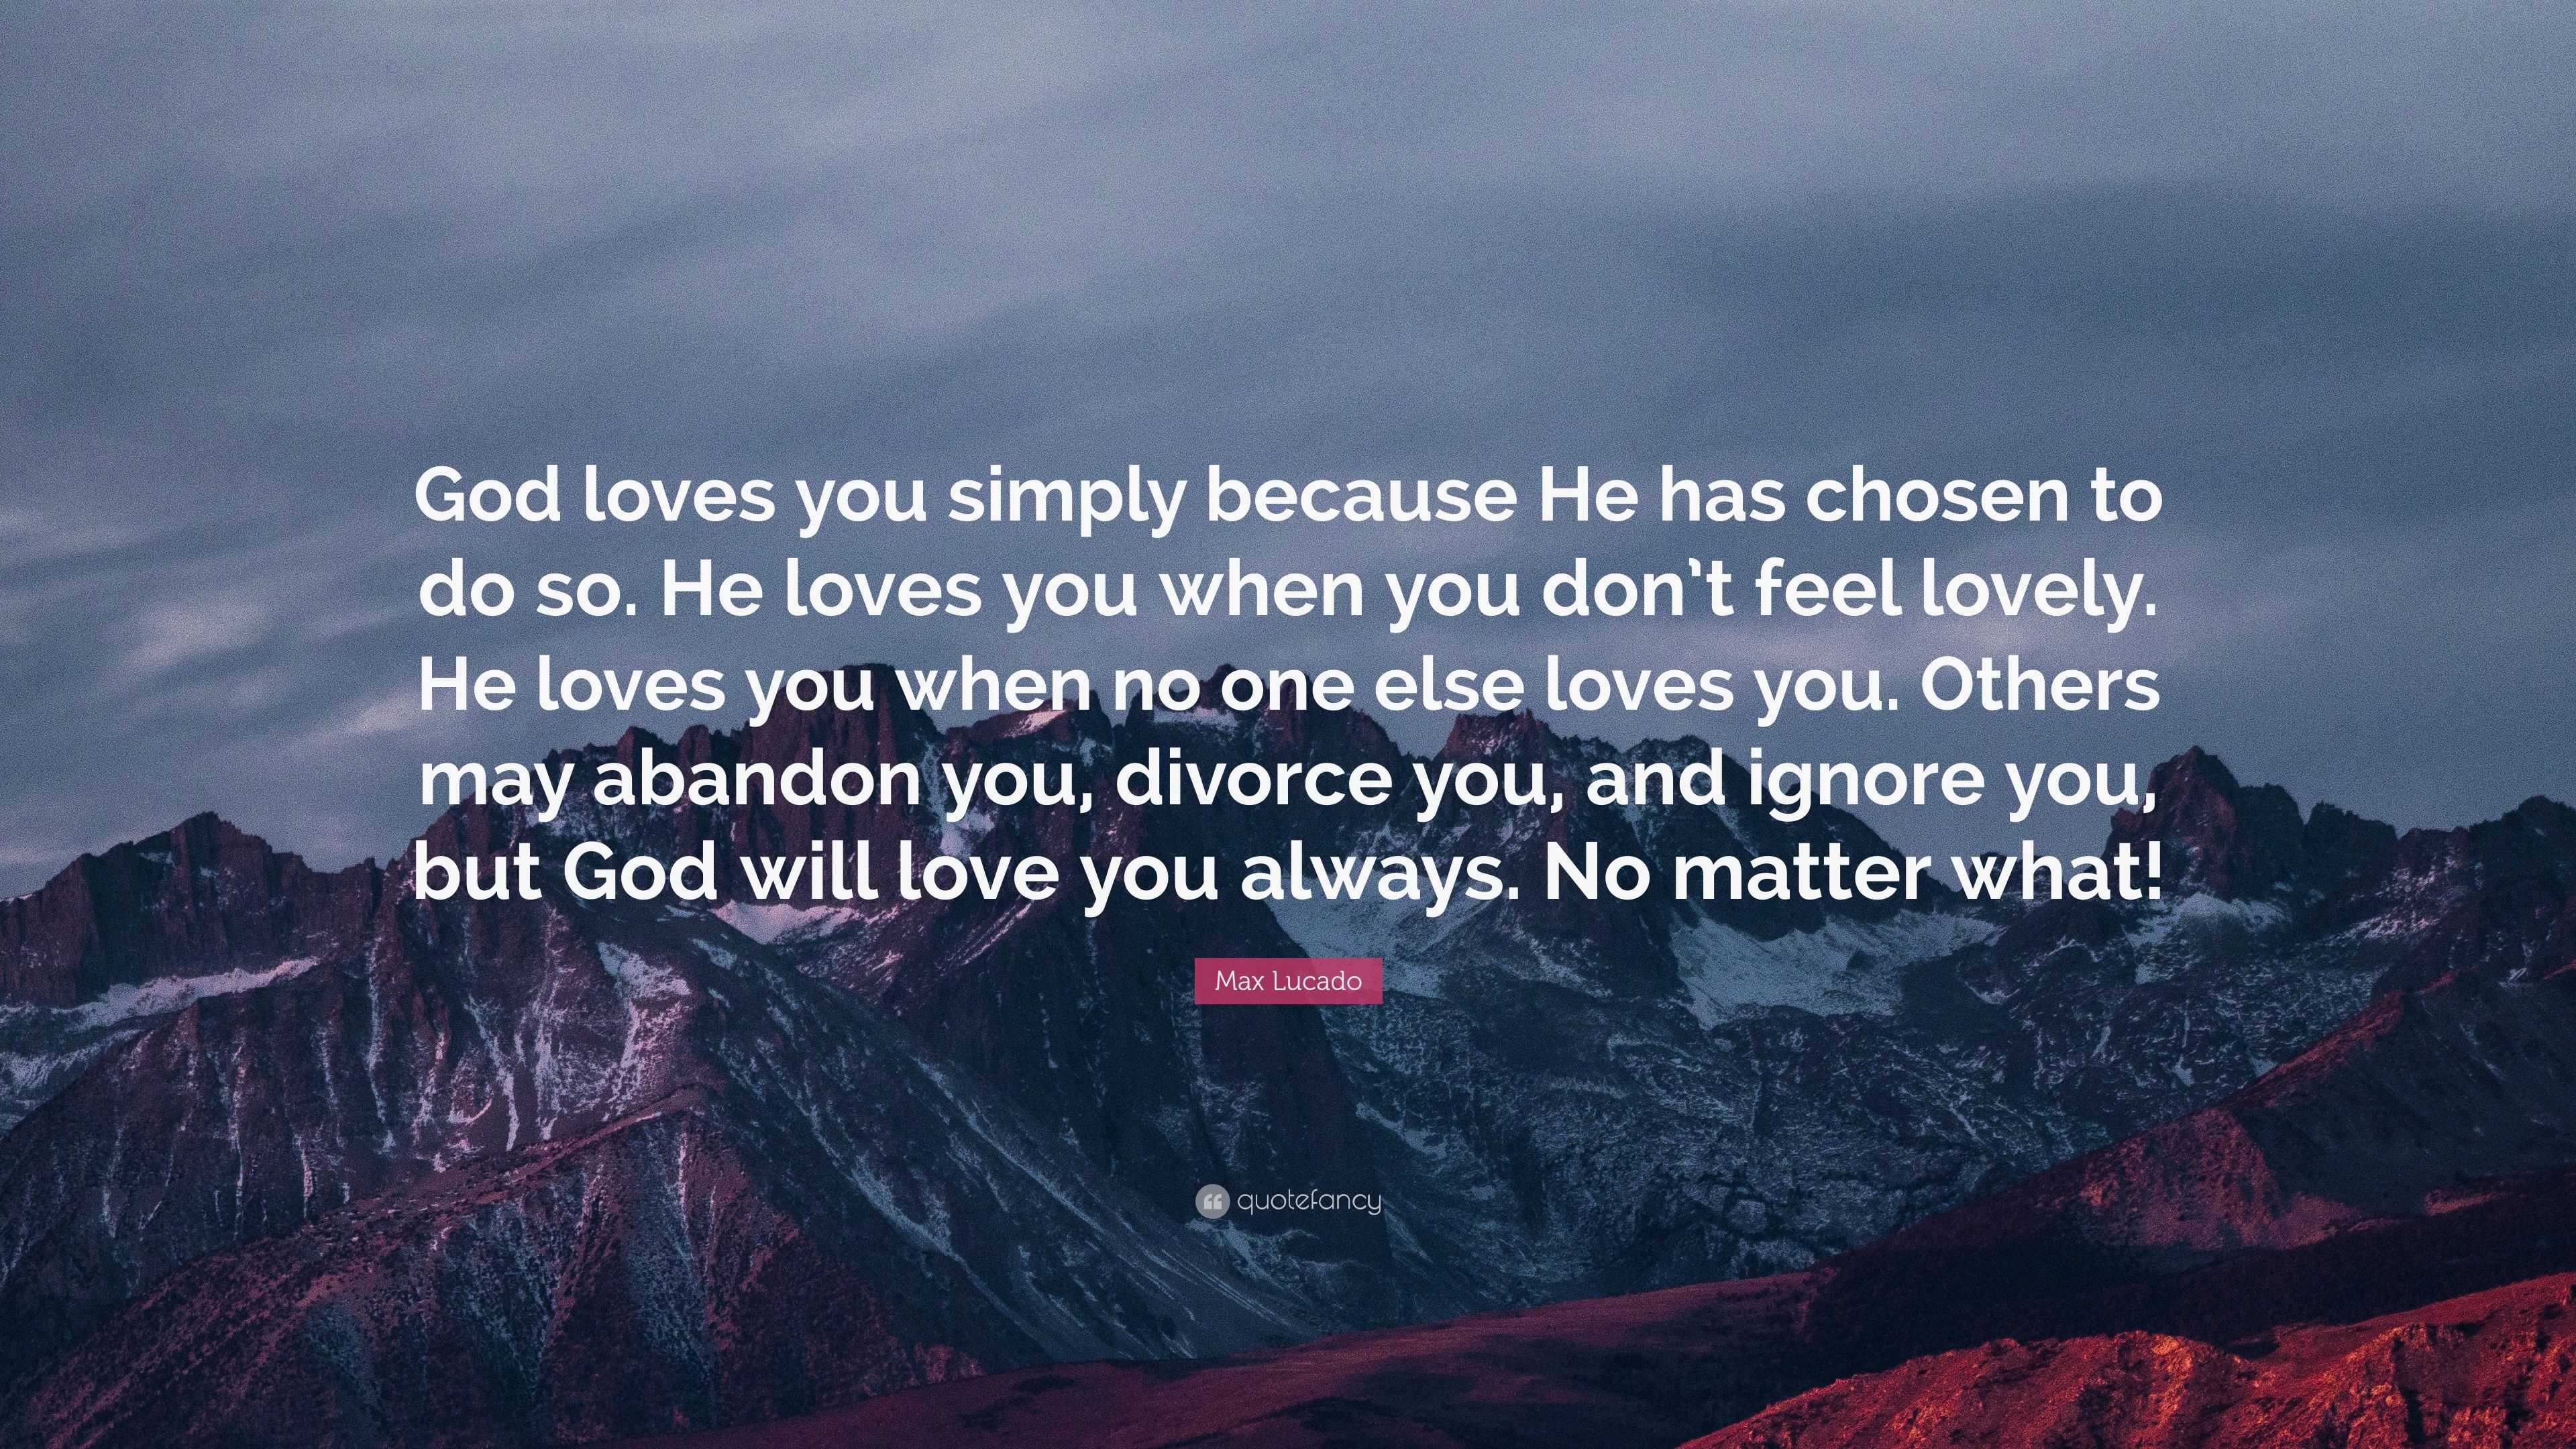 Max Lucado Quote “God loves you simply because He has chosen to do so